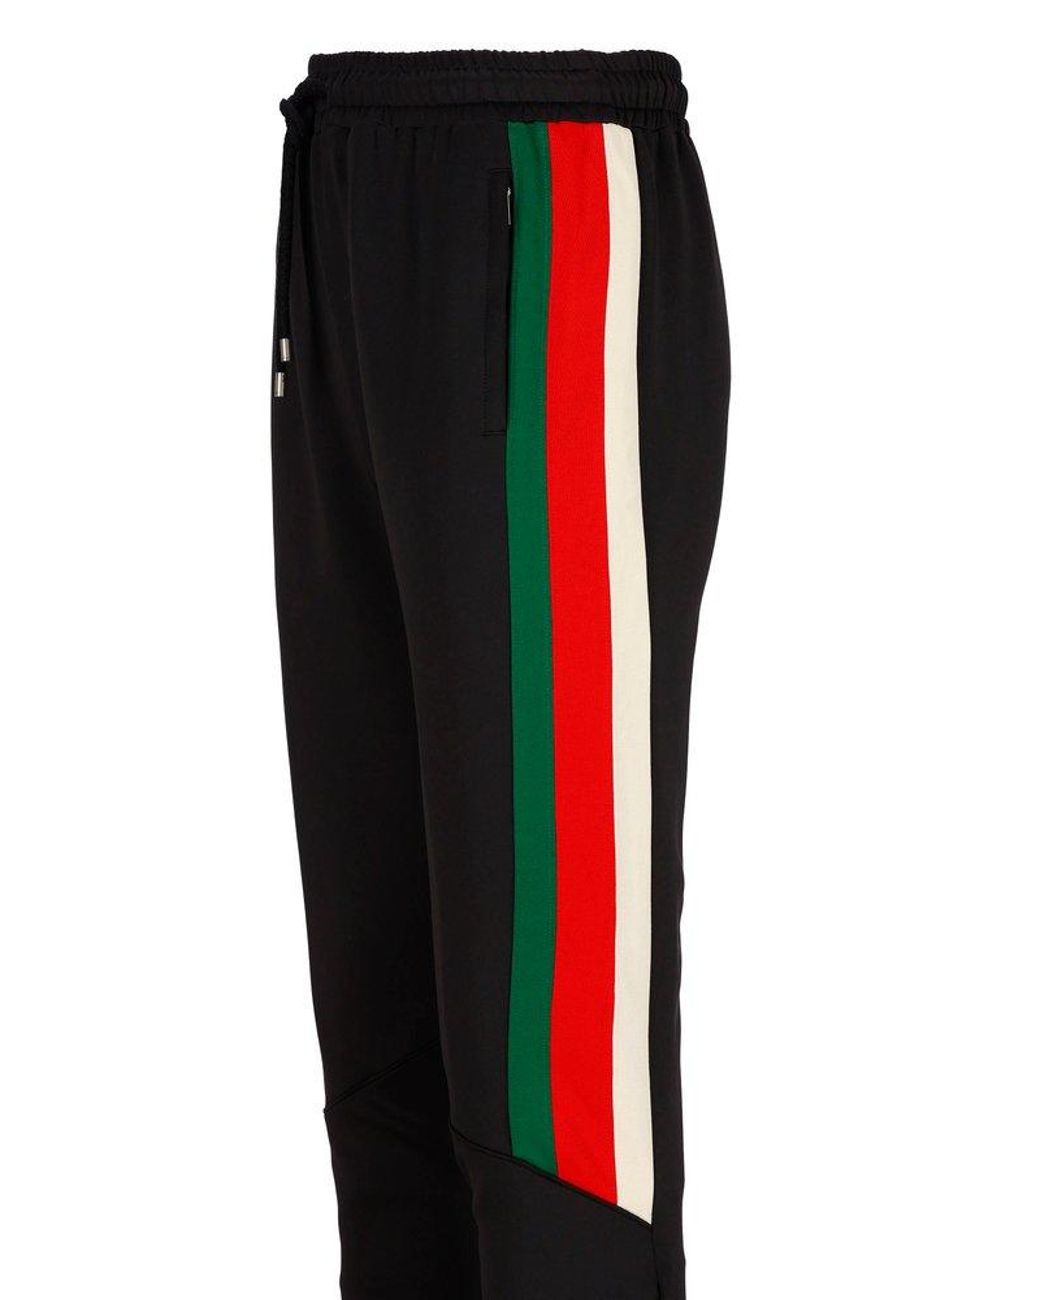 Gucci Track Pants Black Green Red Stripped Drawstring Joggers